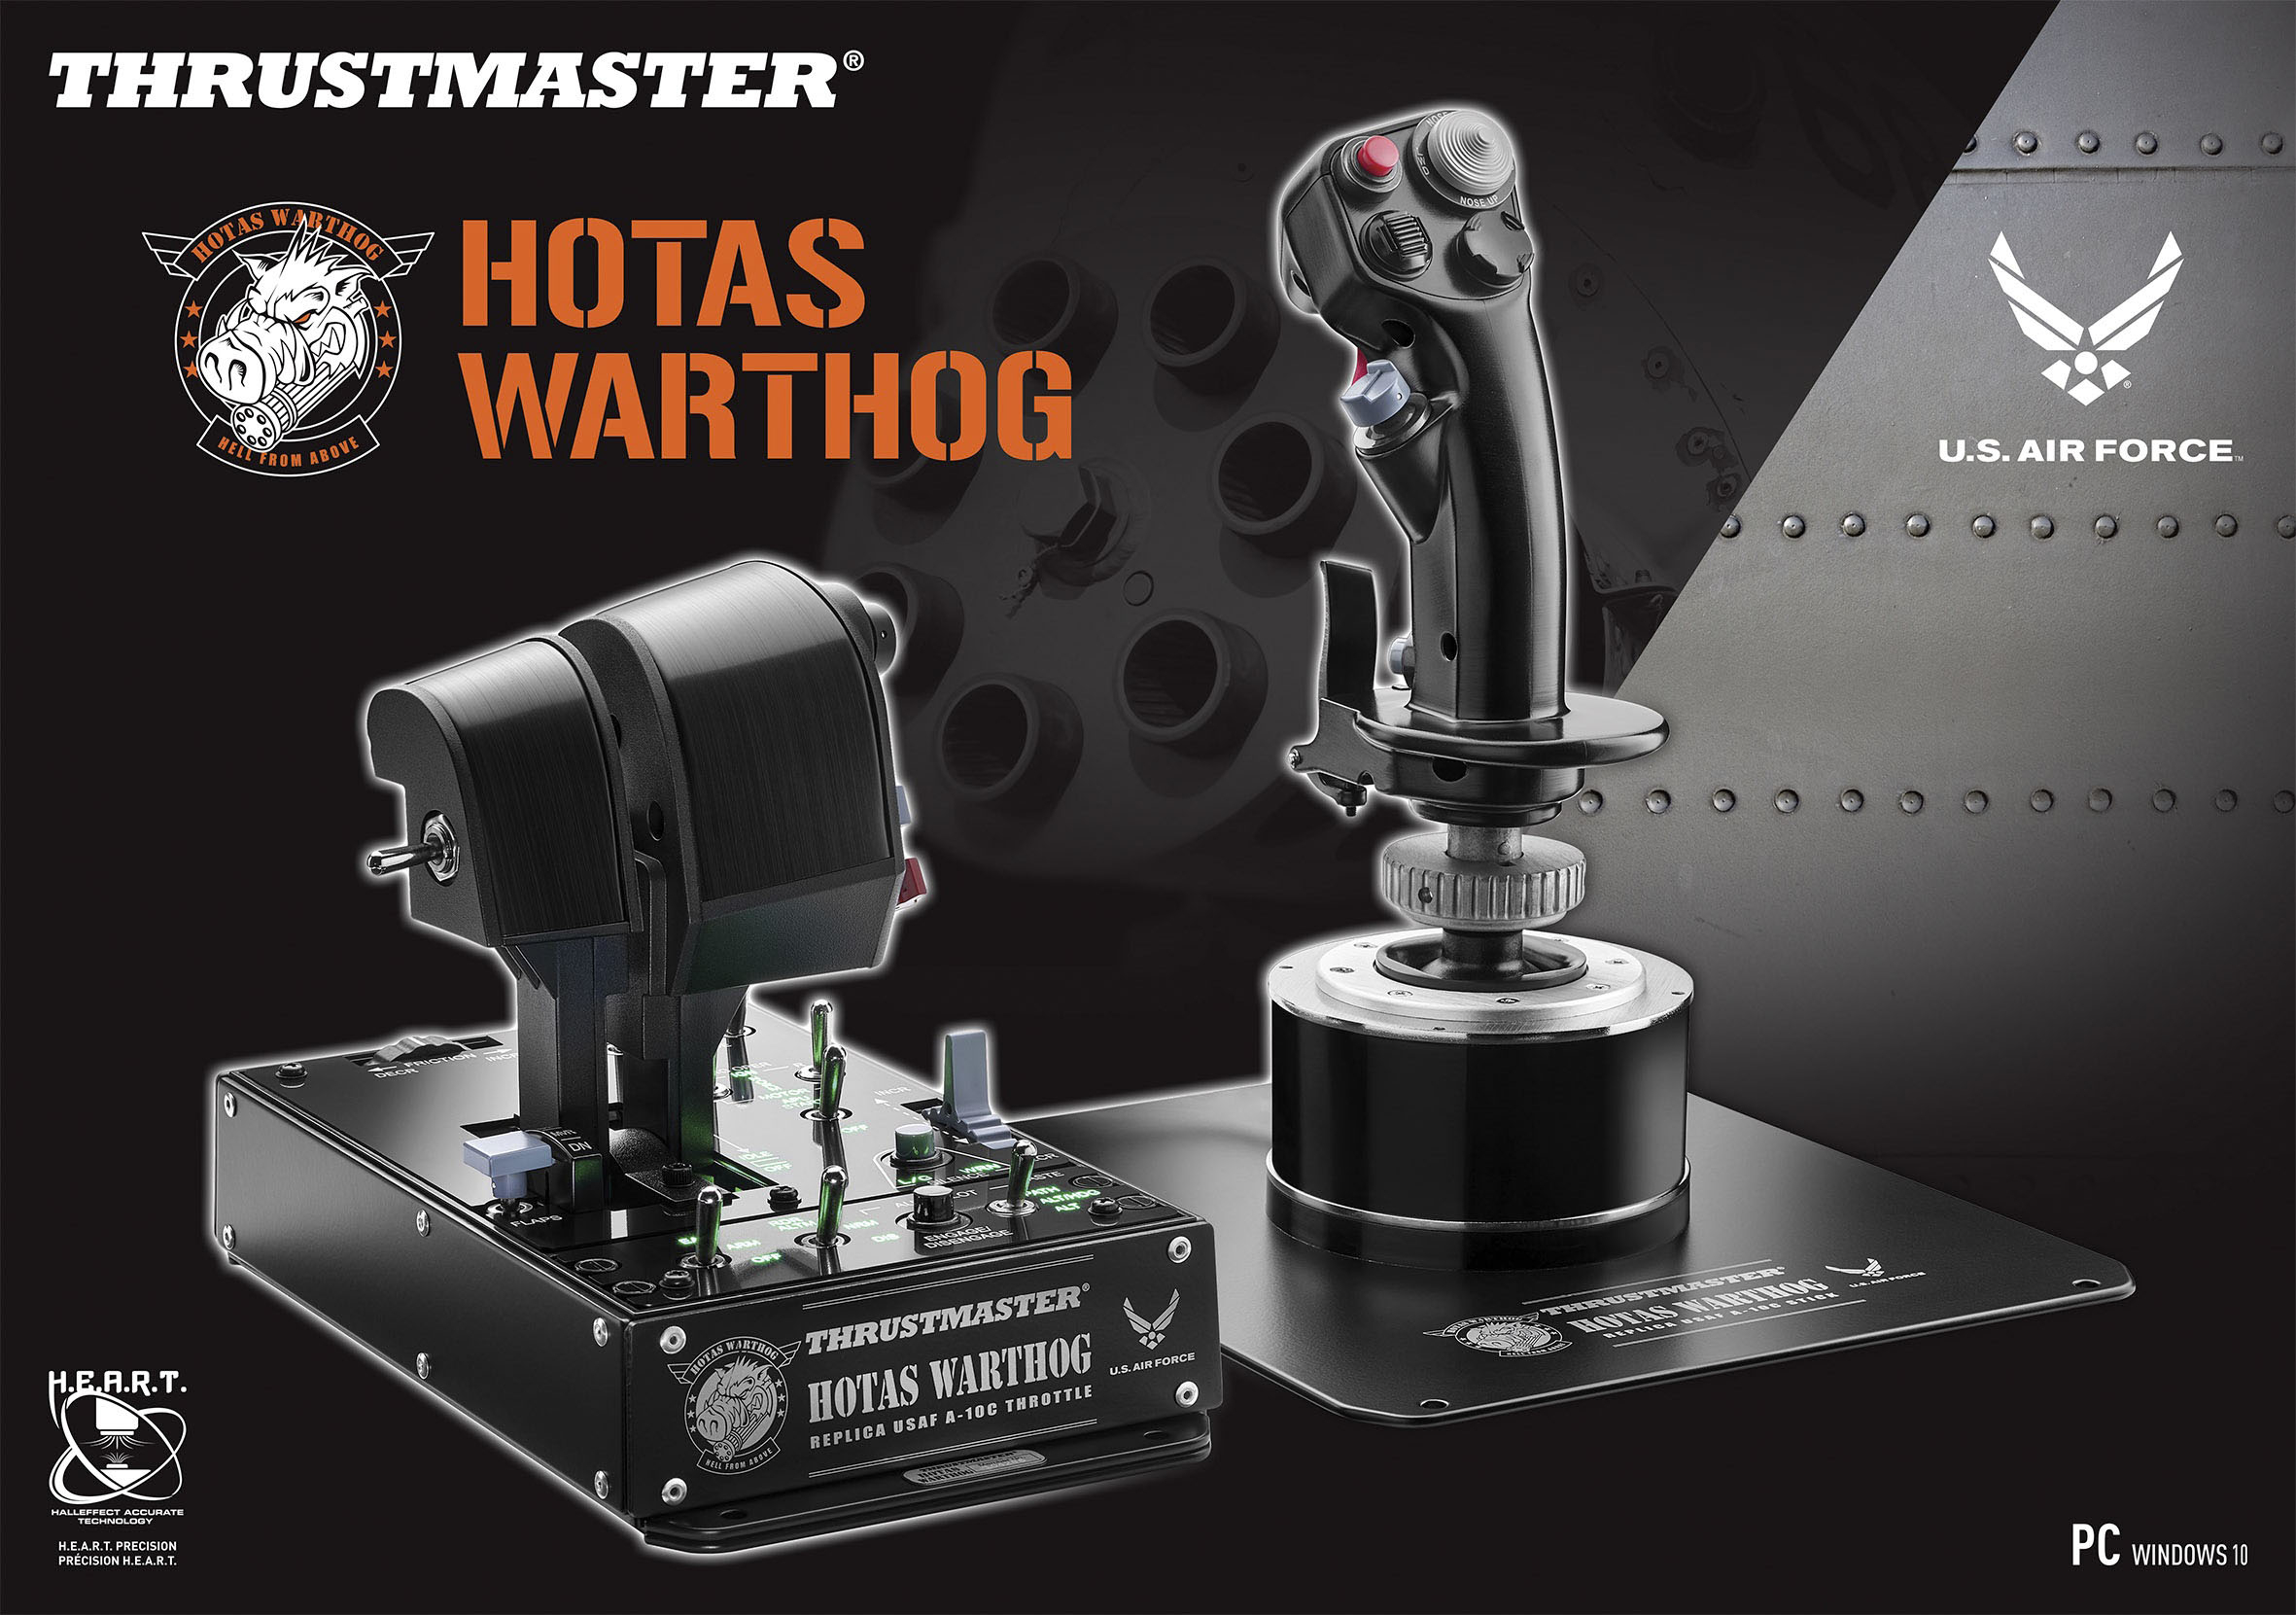 Thrustmaster HOTAS Warthog Dual-Throttle Joystick Review